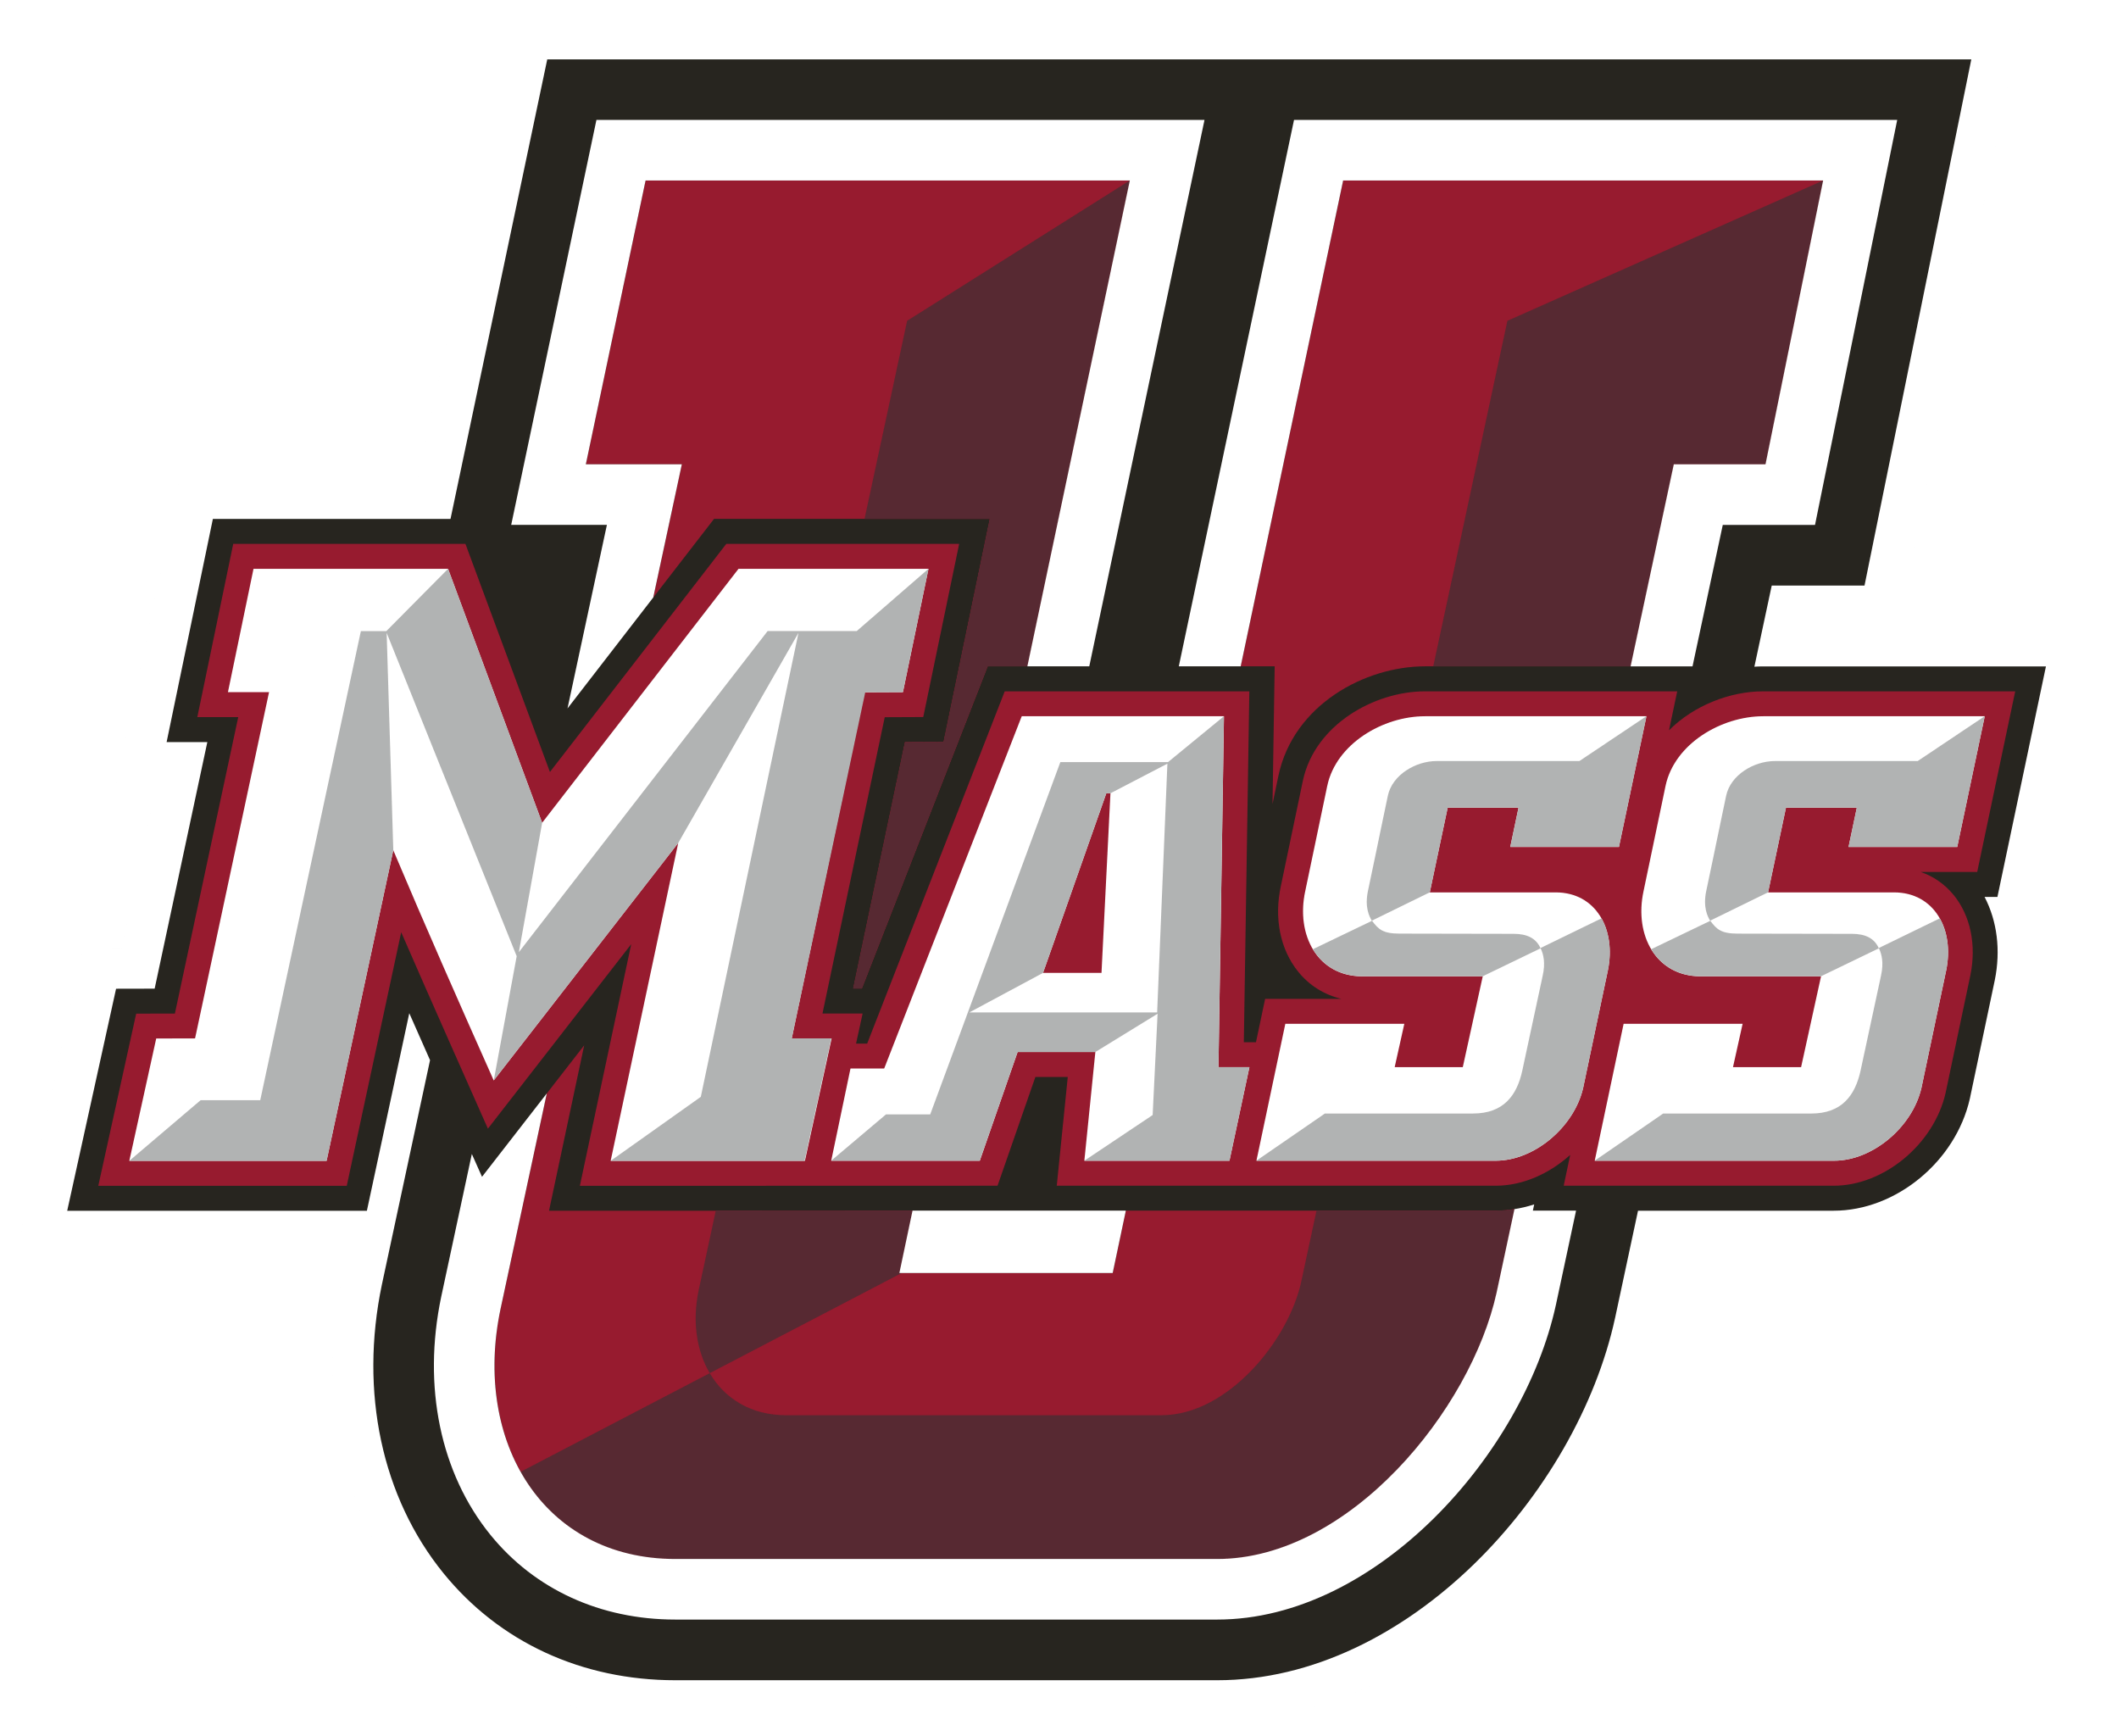 UMass_Amherst_Athletics_logo.svg.png